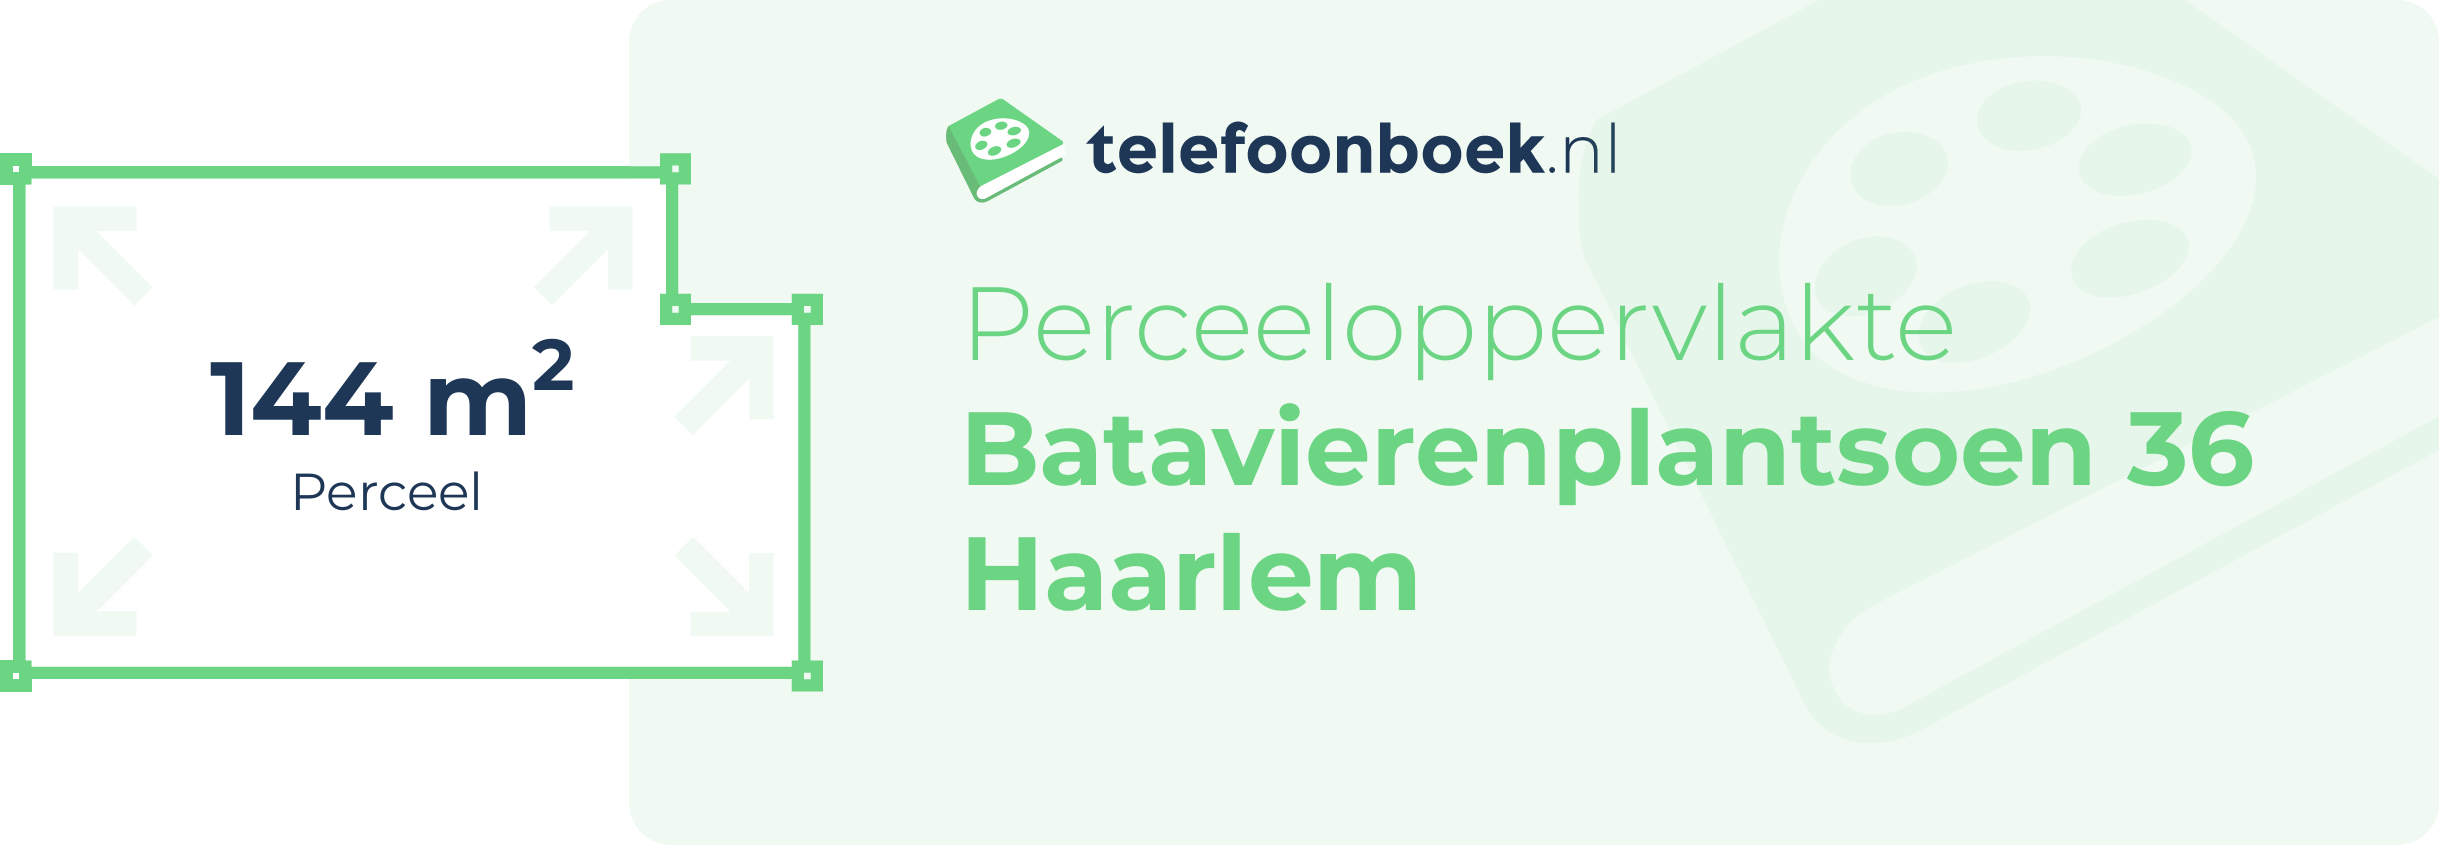 Perceeloppervlakte Batavierenplantsoen 36 Haarlem